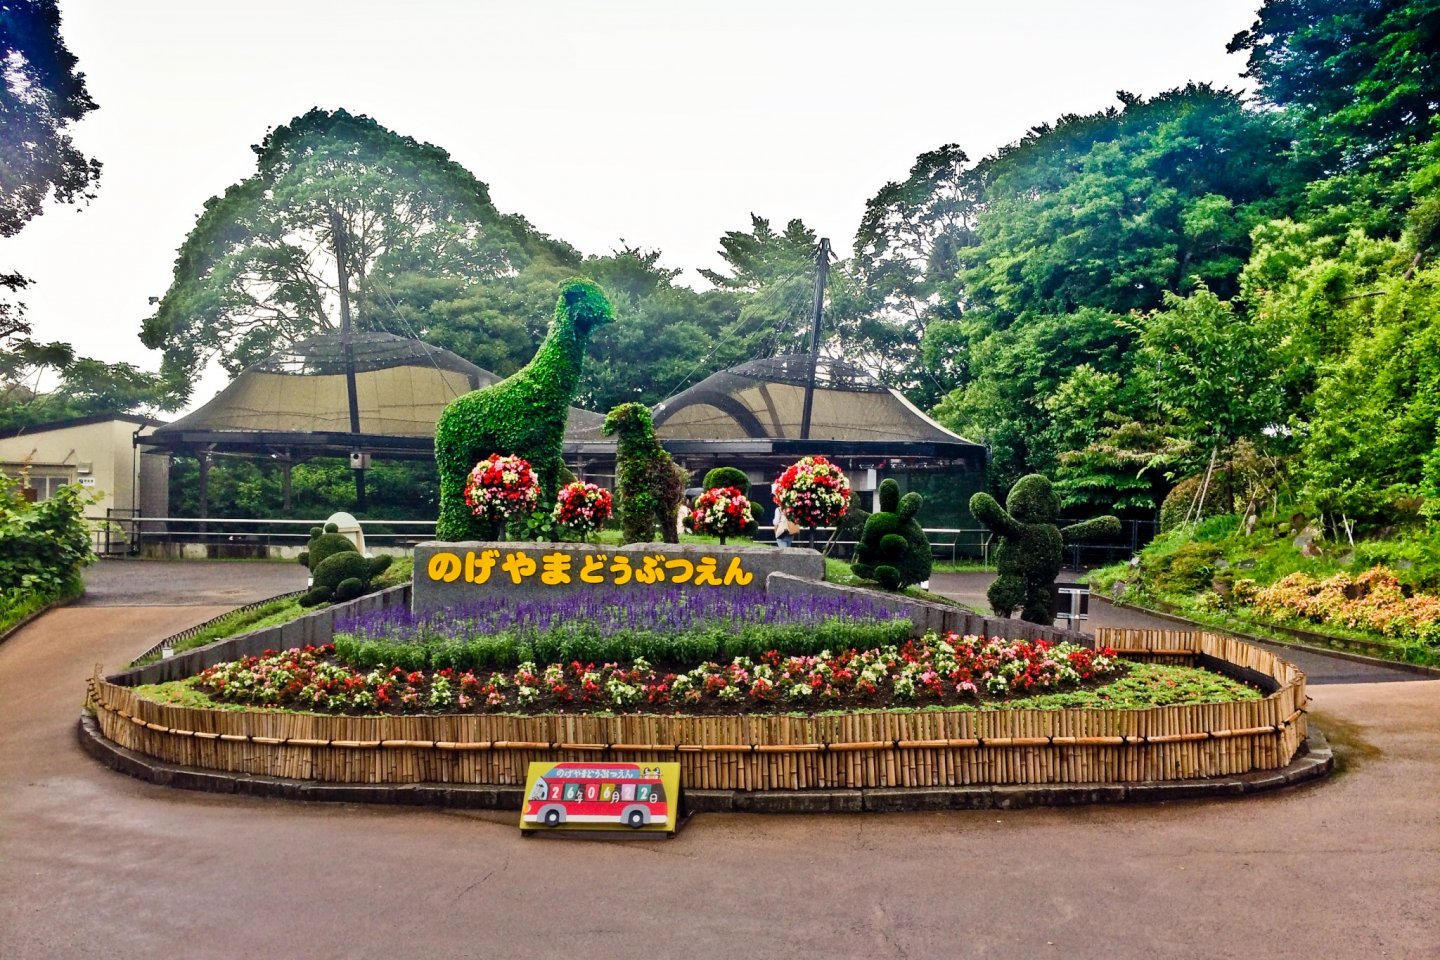 The colorful entrance to Nogeyama Zoo